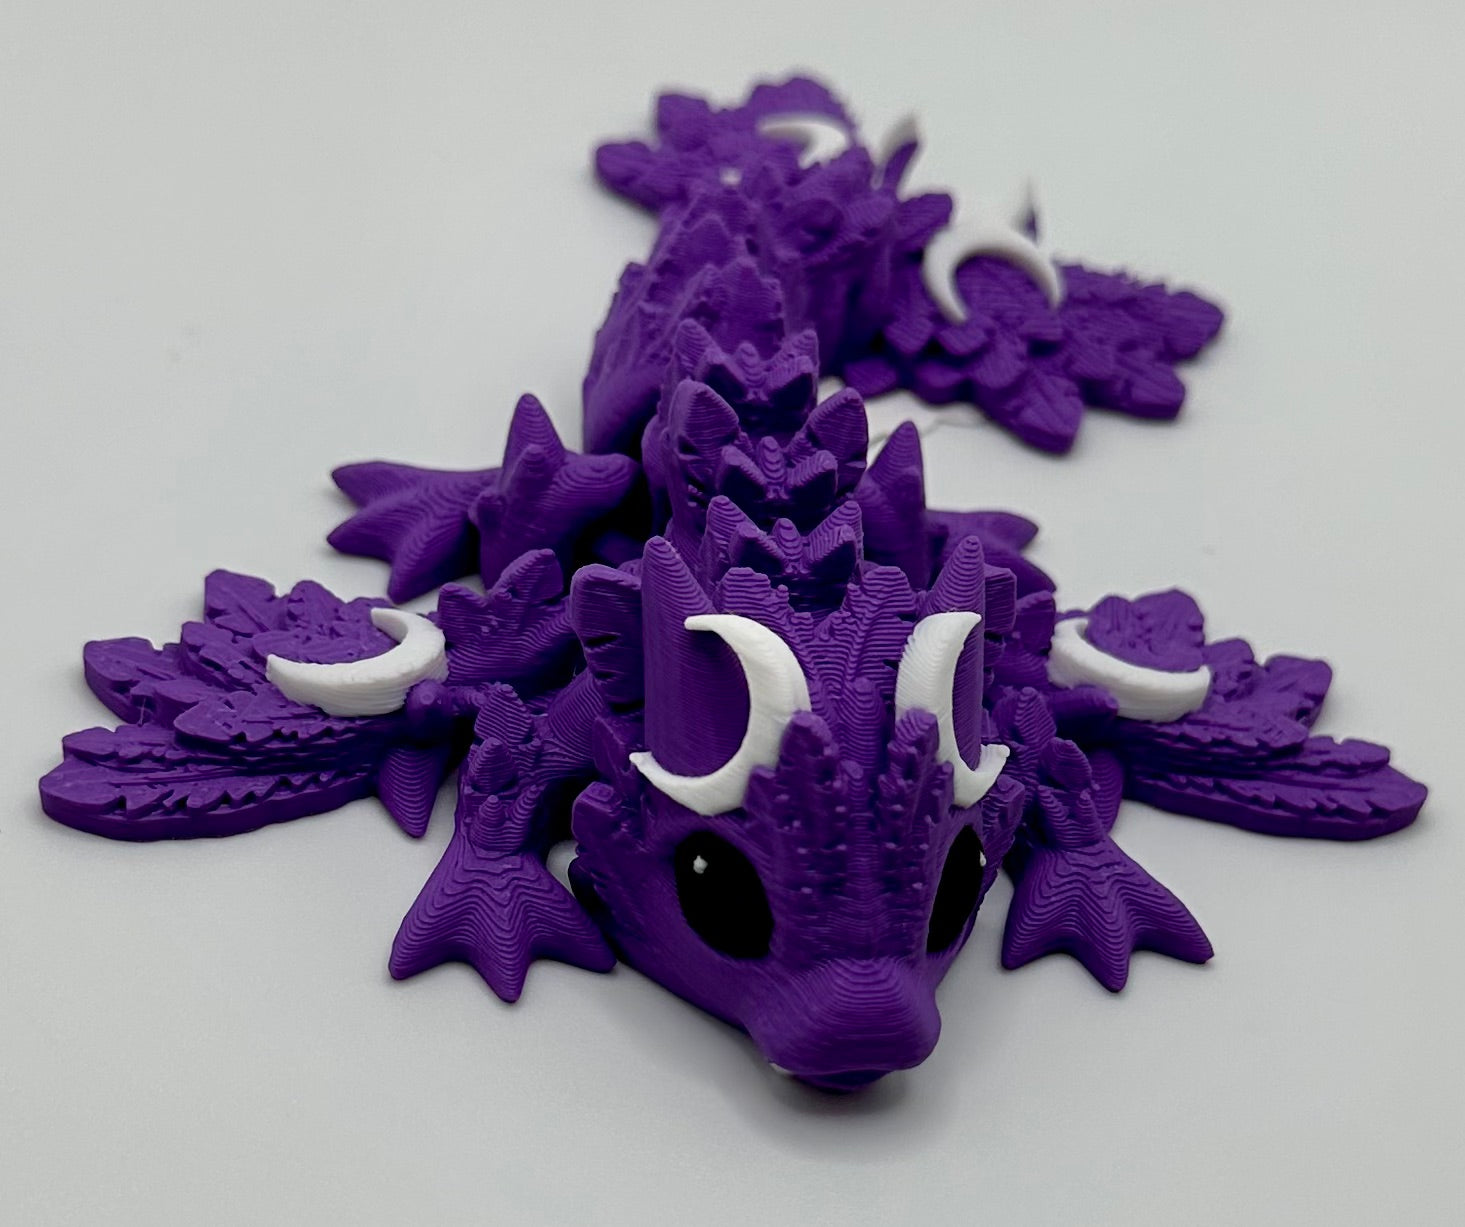 Moon Flying Dragon Epoxy Resin Mold - Create Mesmerizing 3D Dragon